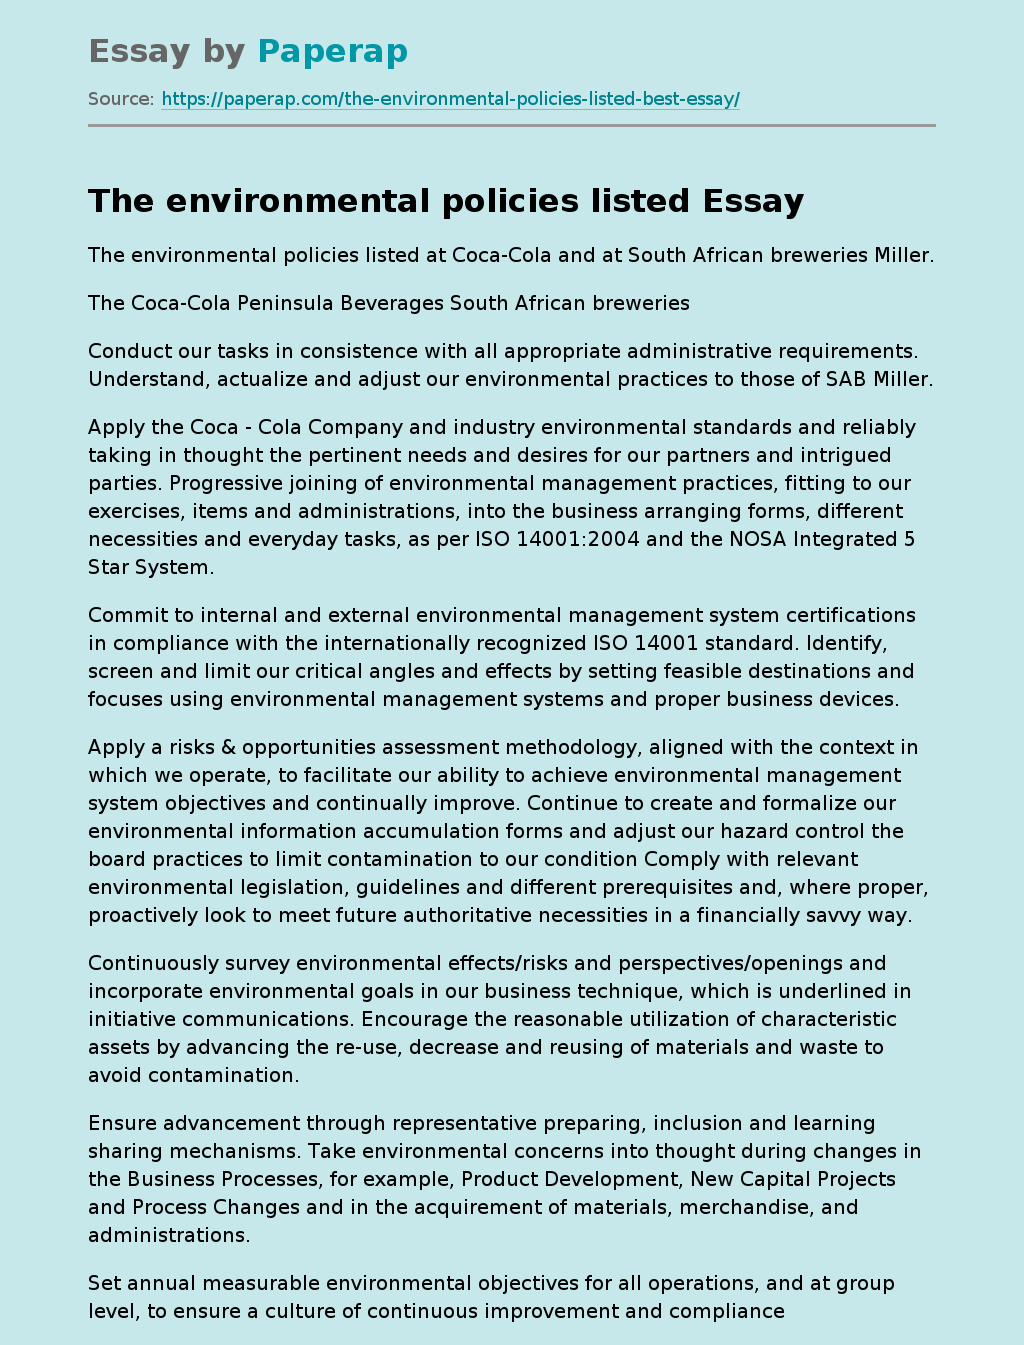 Set of Intentions and Principles Regarding Environmental Performance